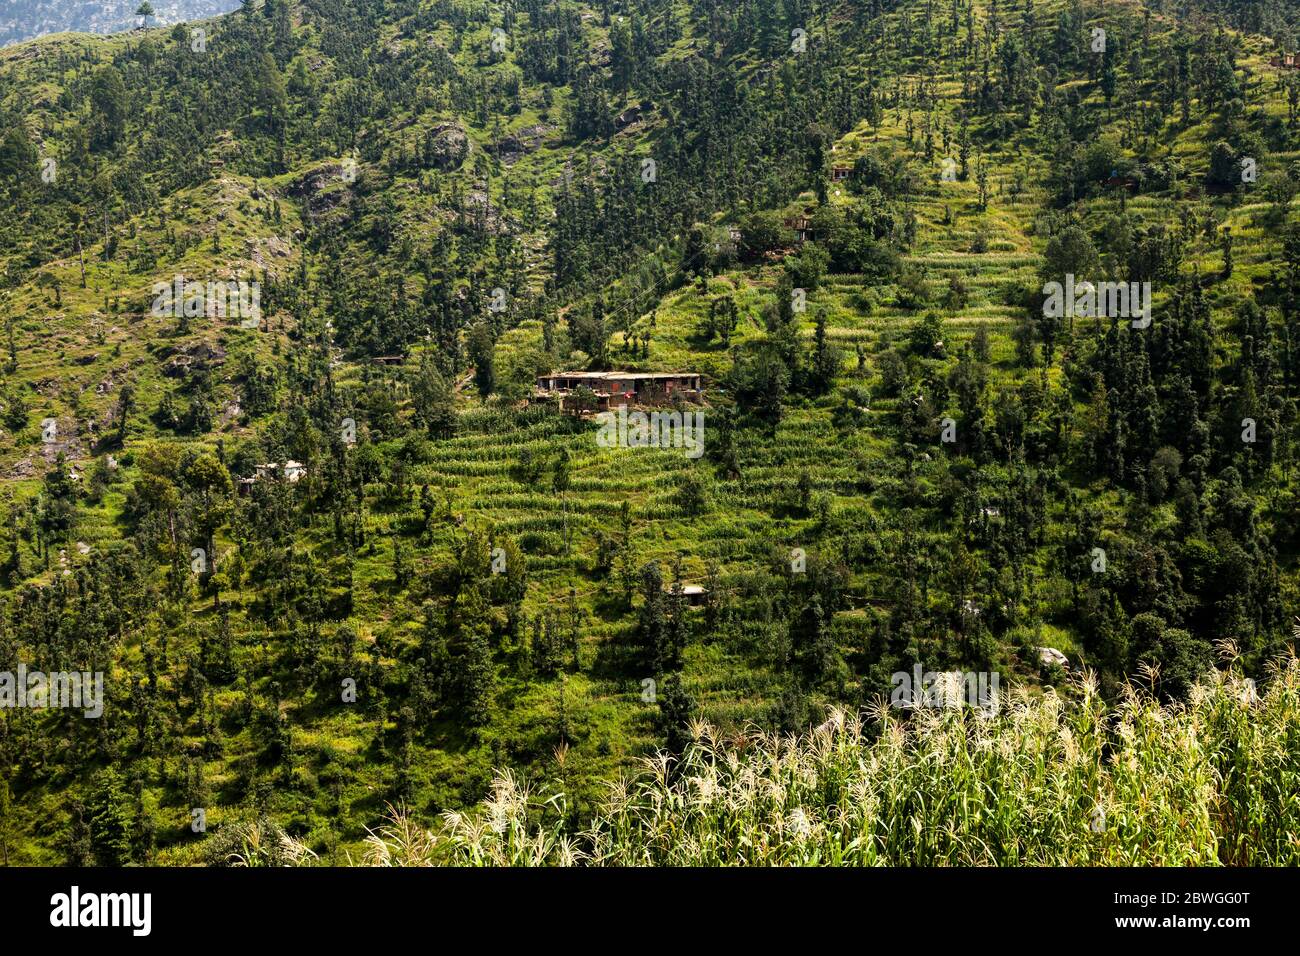 Versteckte Galerie, Elum Mountain Trekking Pfad, Marghuzar, Swat, Khyber Pakhtunkhwa Provinz, Pakistan, Südasien, Asien Stockfoto